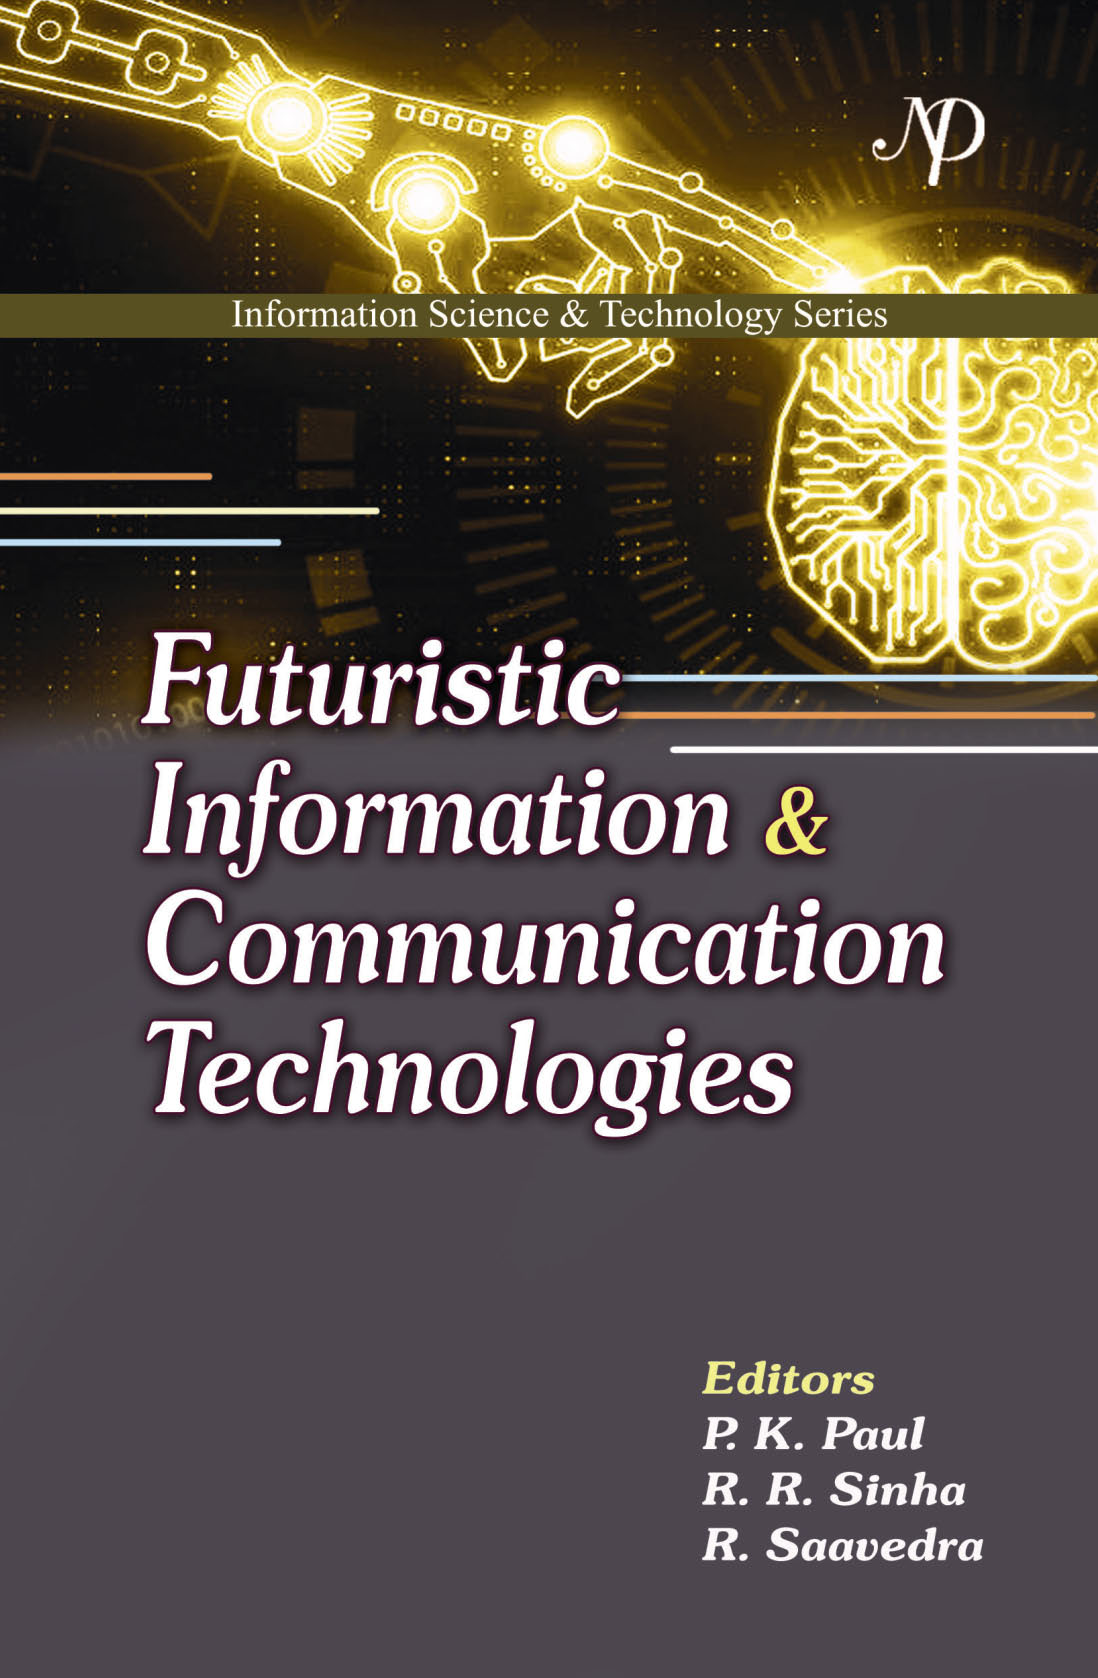 Futuristic Information & Communication Technologies By PK Paul Cover.jpg